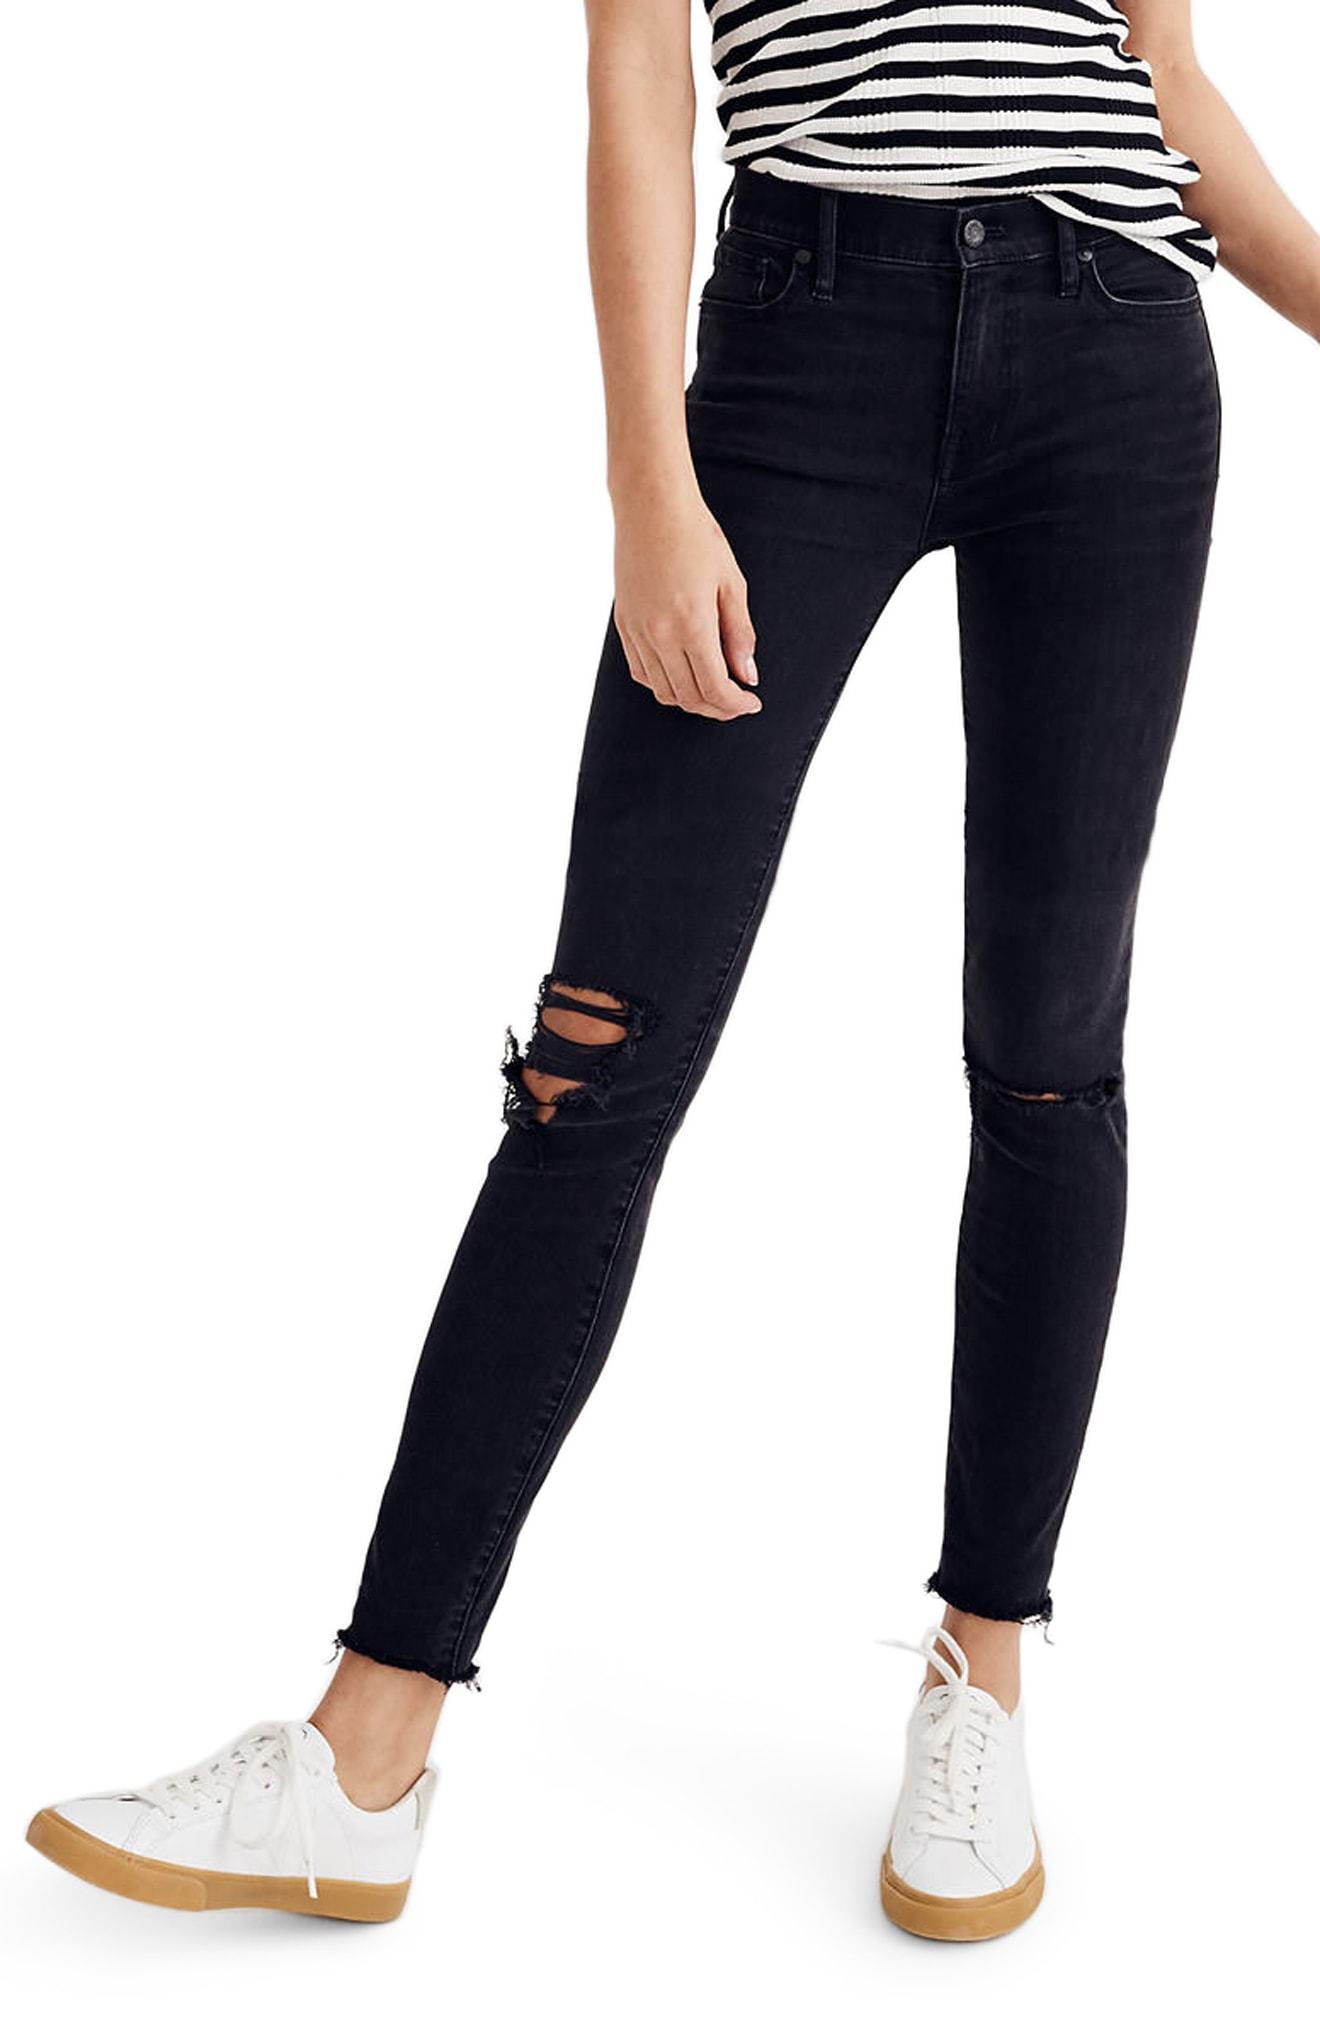 https://cdn.lookastic.com/navy-ripped-skinny-jeans/9-inch-high-waist-skinny-jeans-original-9115117.jpg